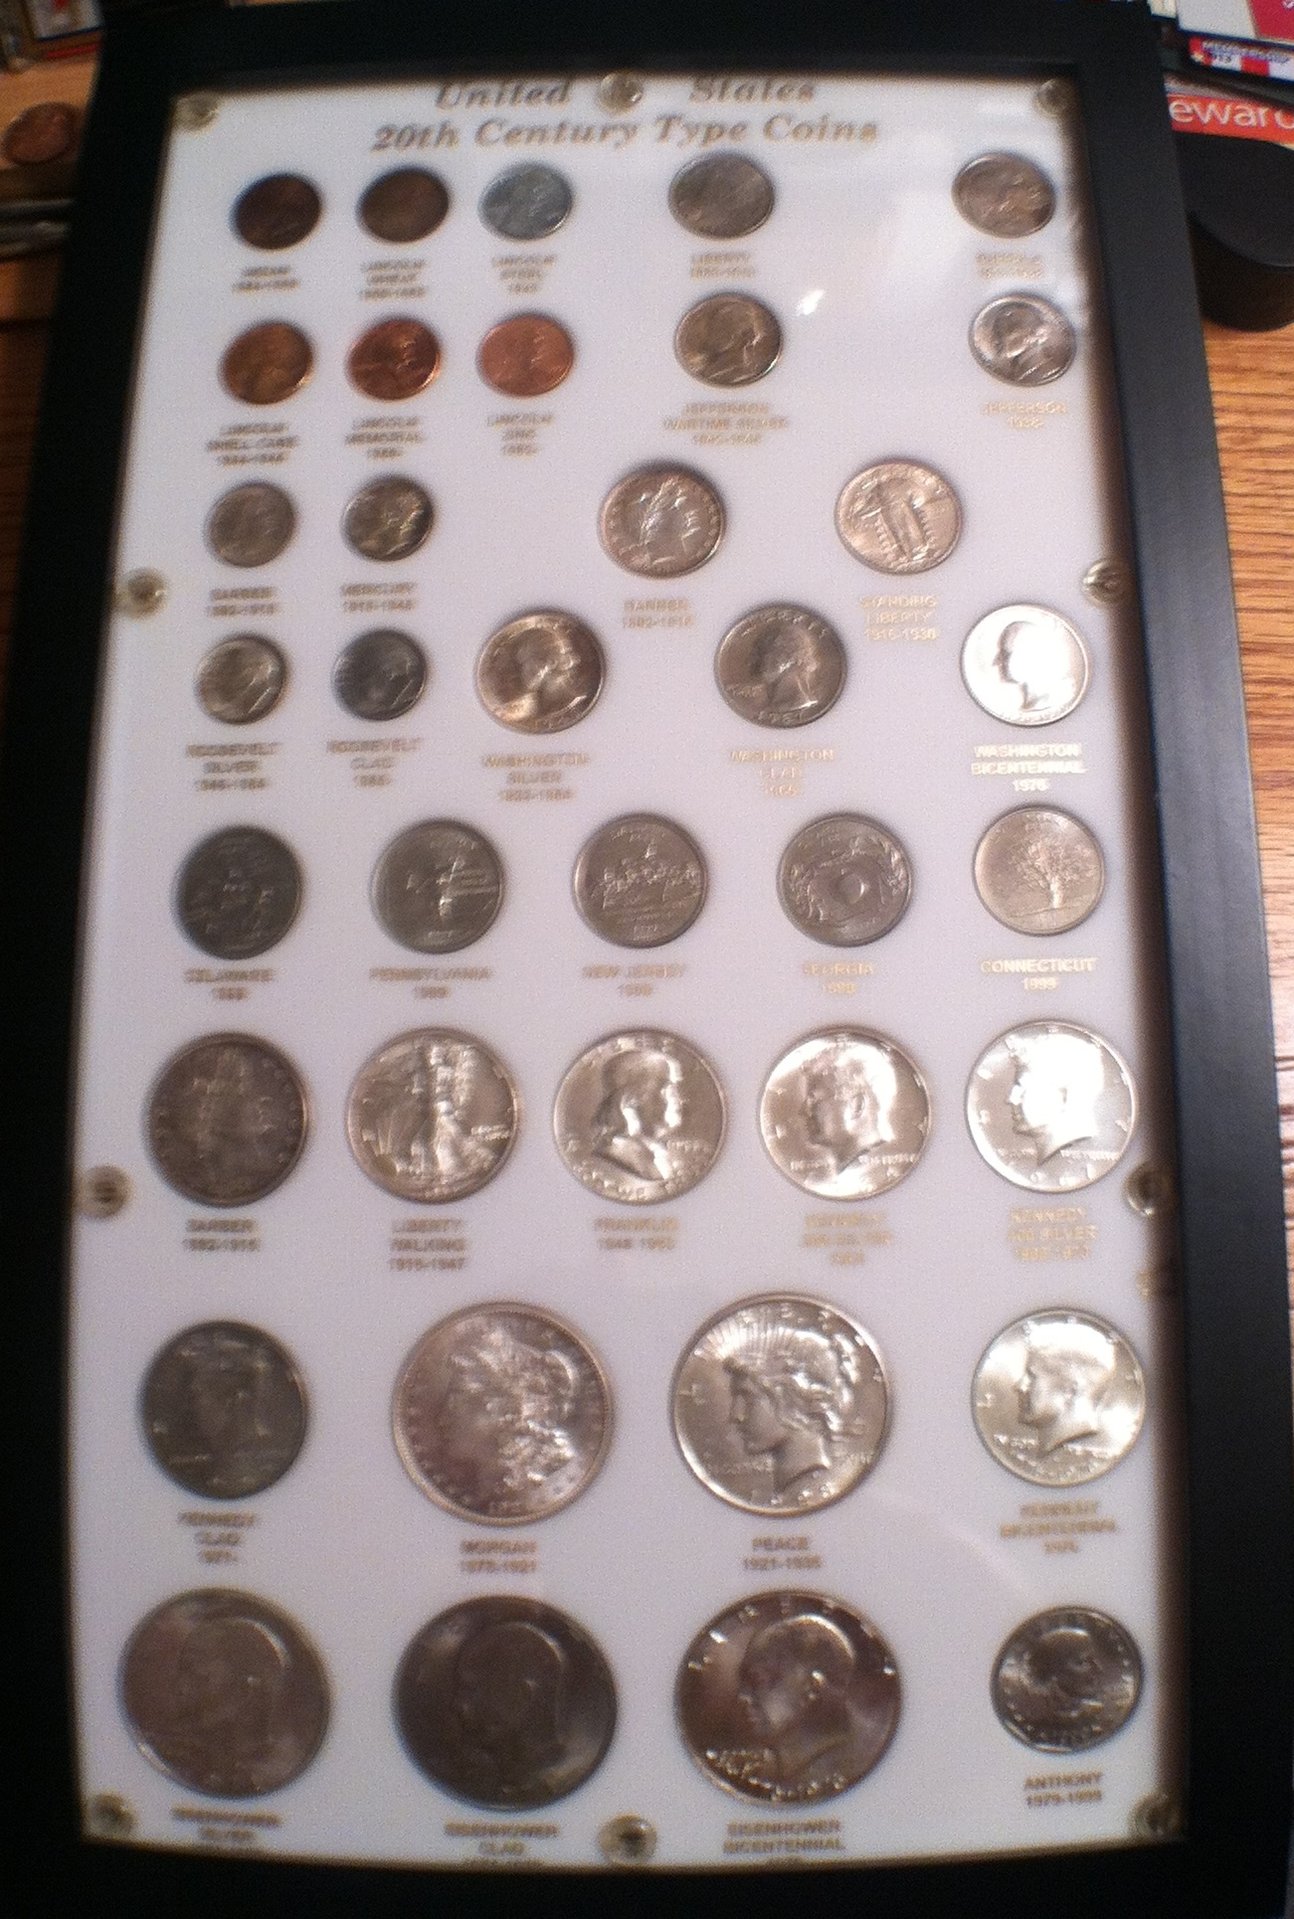 20th century coins.jpg